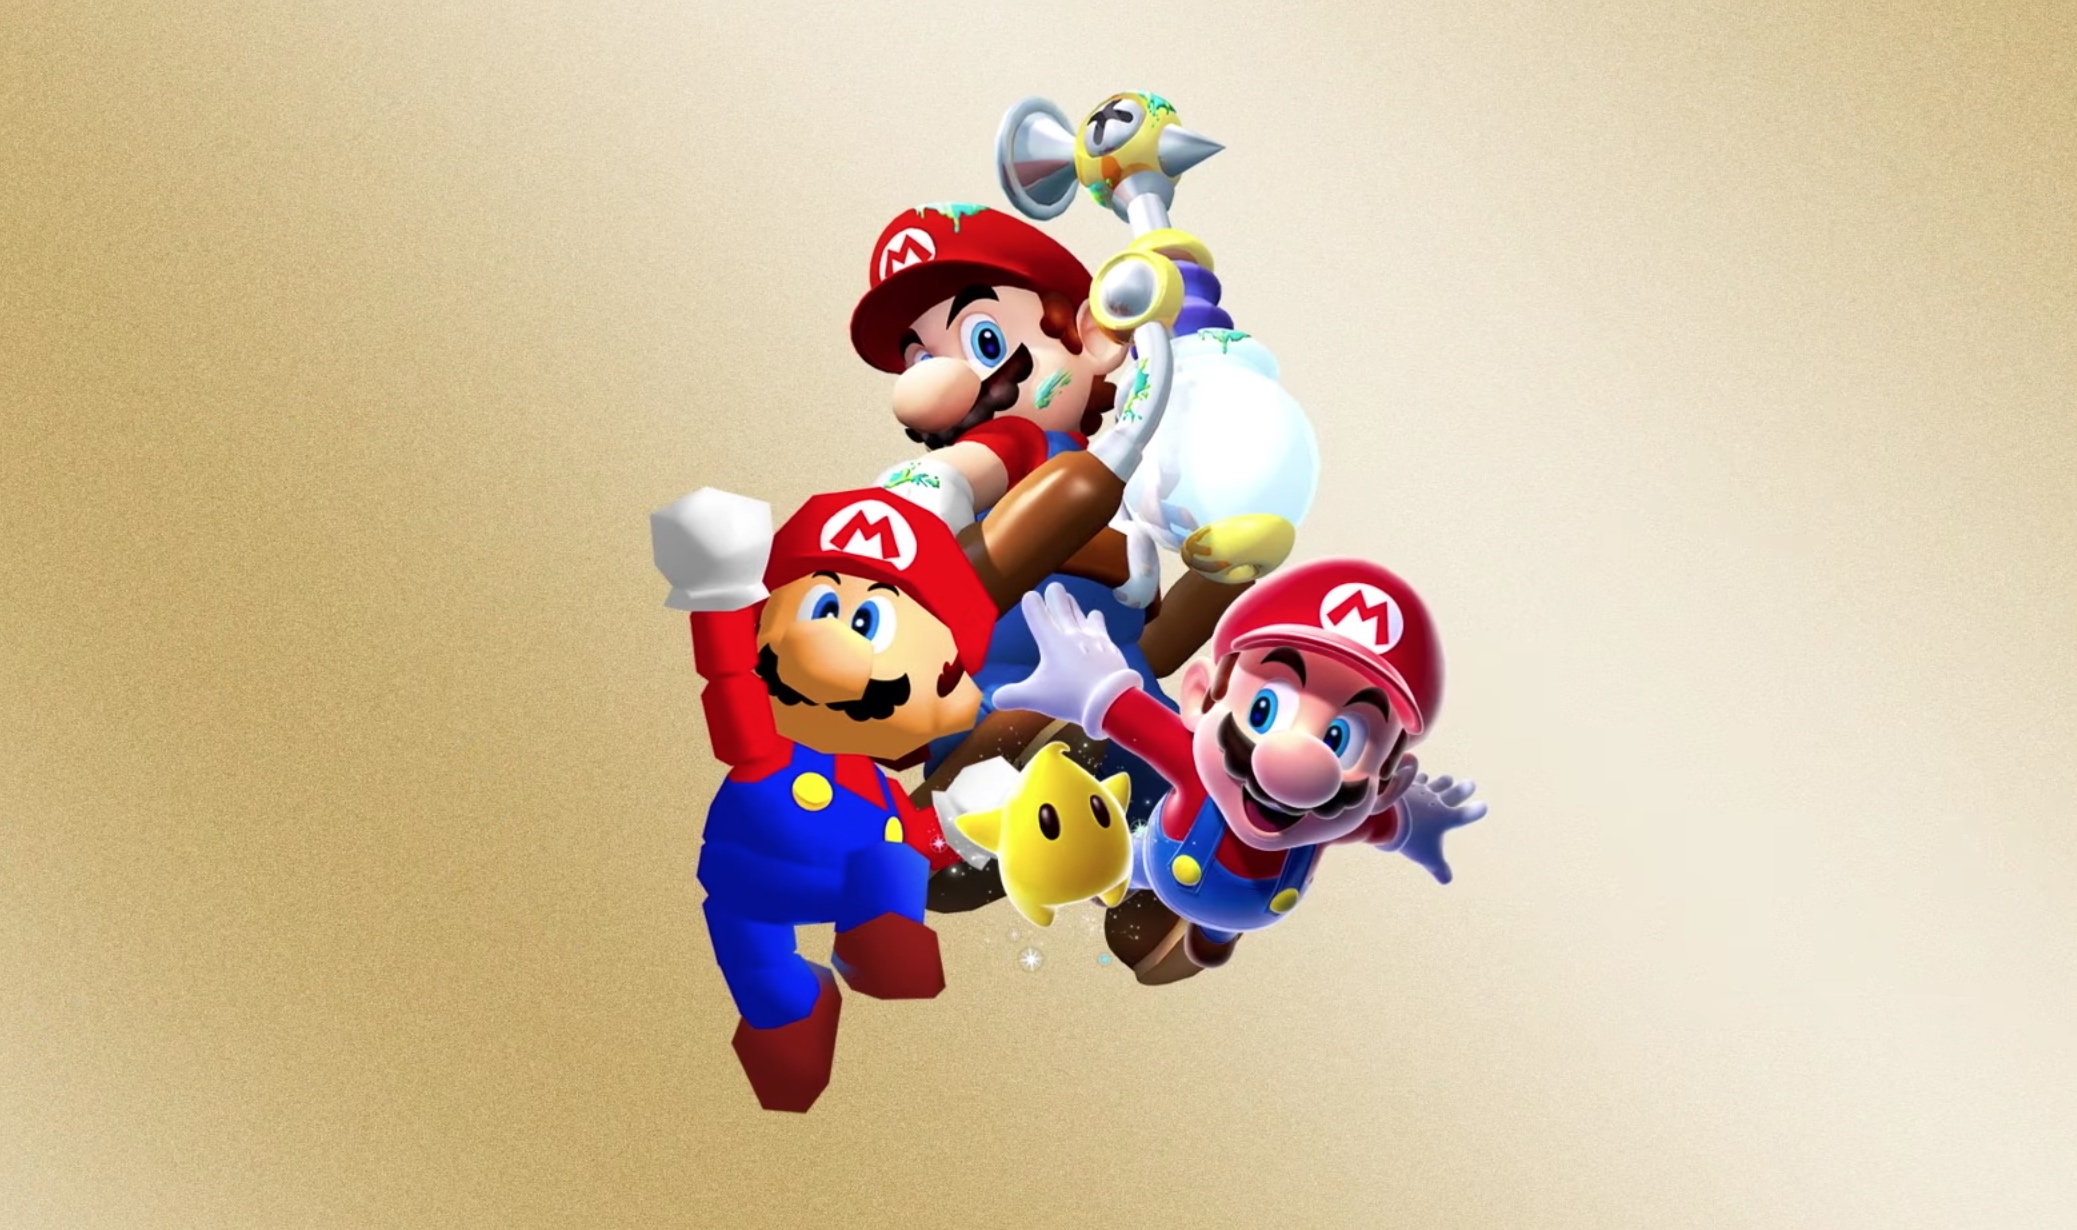 Super mario 3d stars. Super Mario 3d all-Stars Nintendo Switch. Super Mario 3d all-Stars картридж. Super Mario 3d all Stars (Nintendo Switch) обложка. Марио 3д модель.